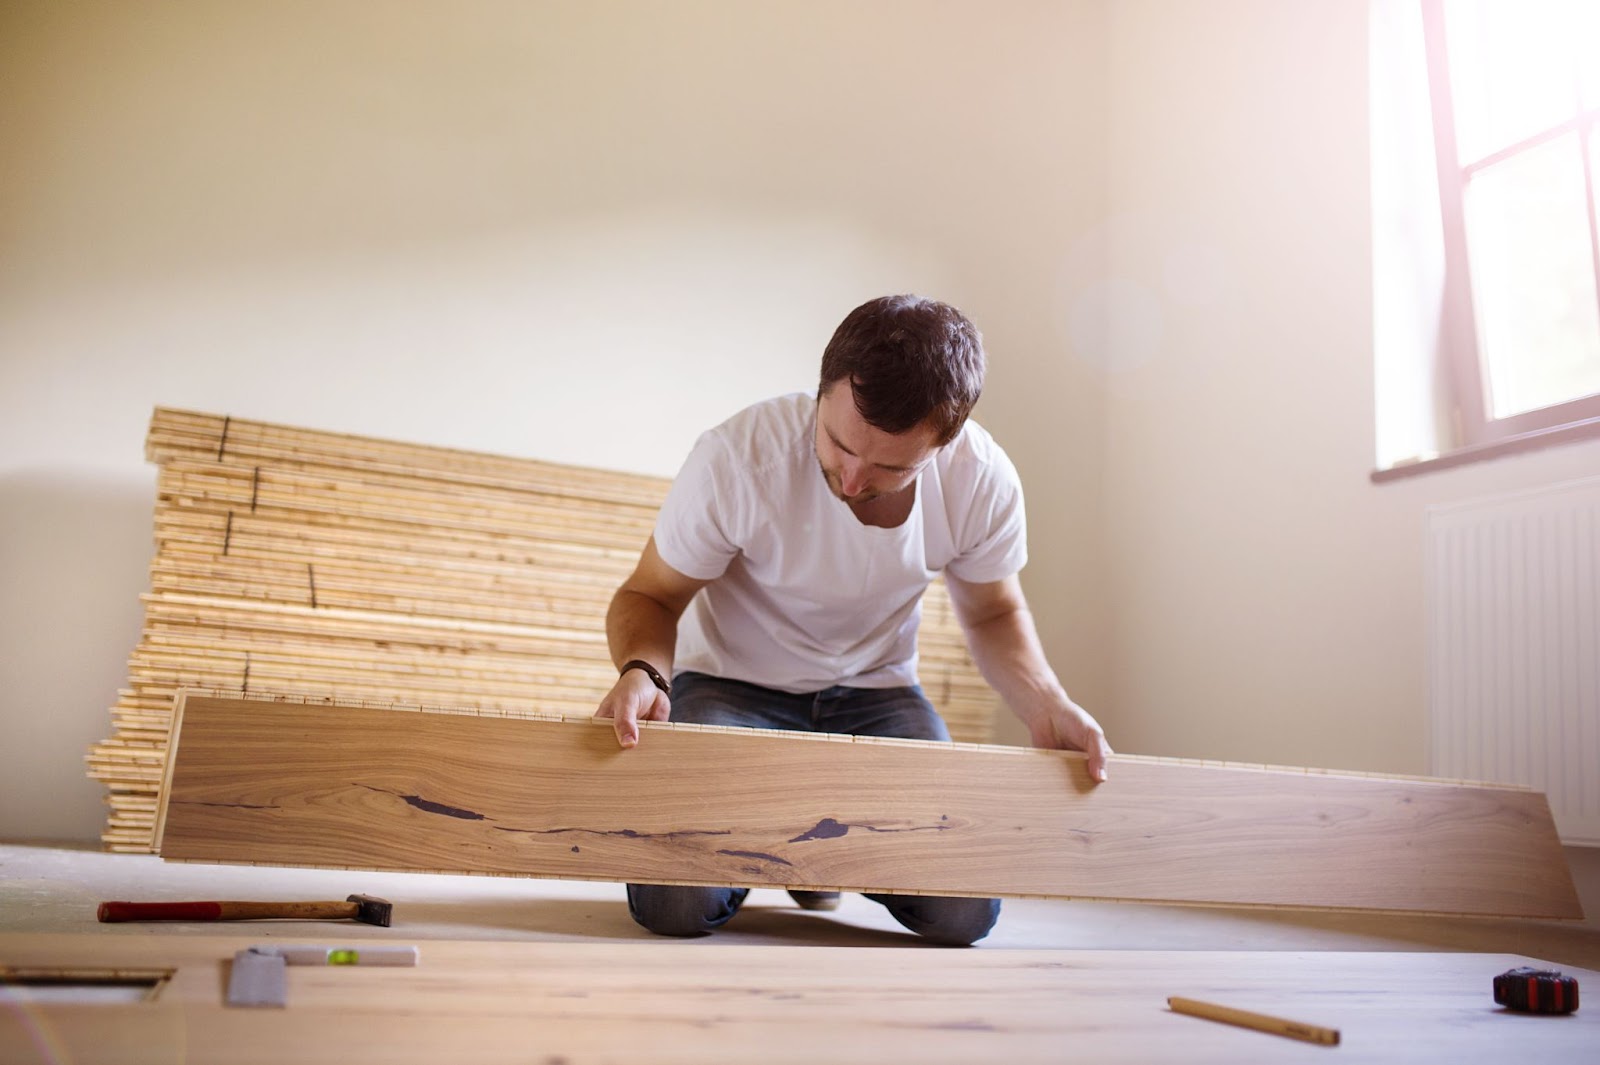 A handyman is installing a wooden floor.